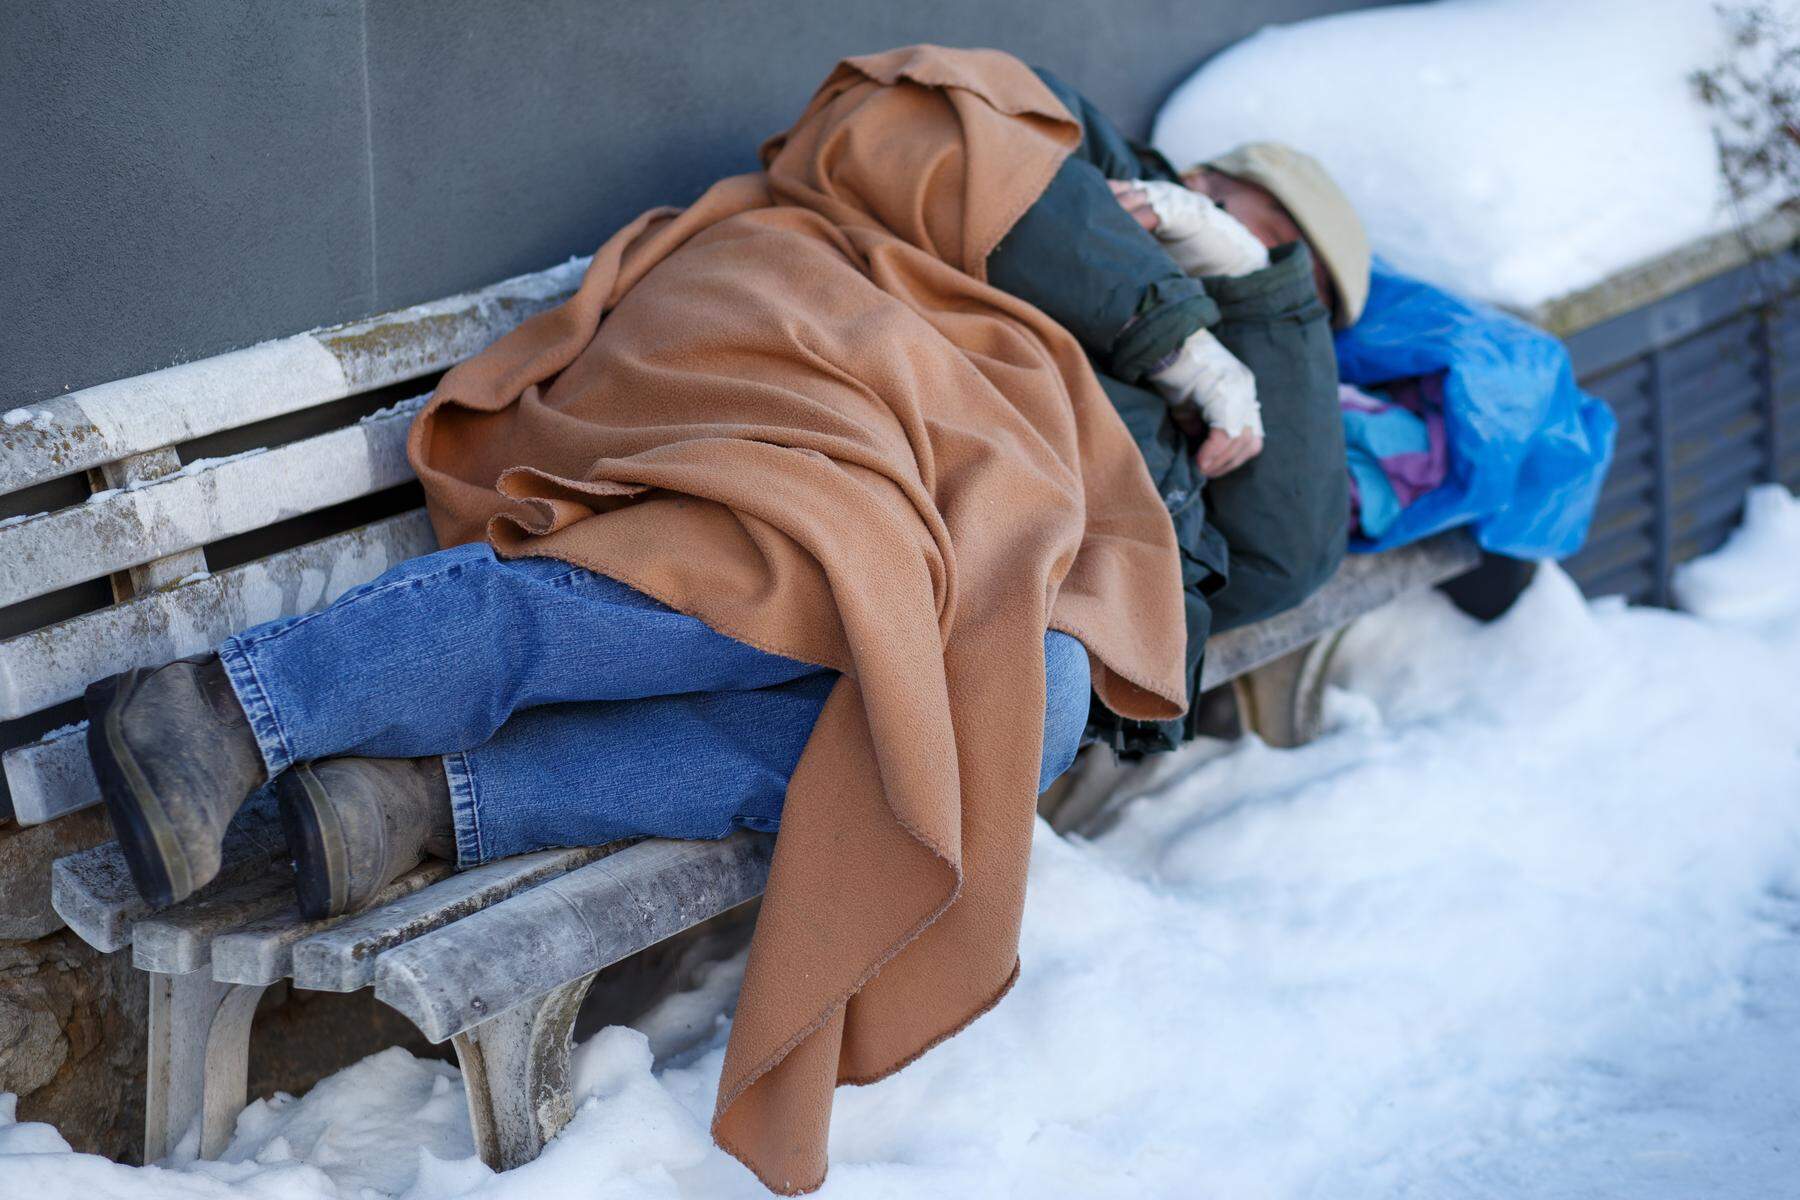 Kältetelefon | Hilfe für Obdachlose: Caritas appelliert achtsam zu bleiben